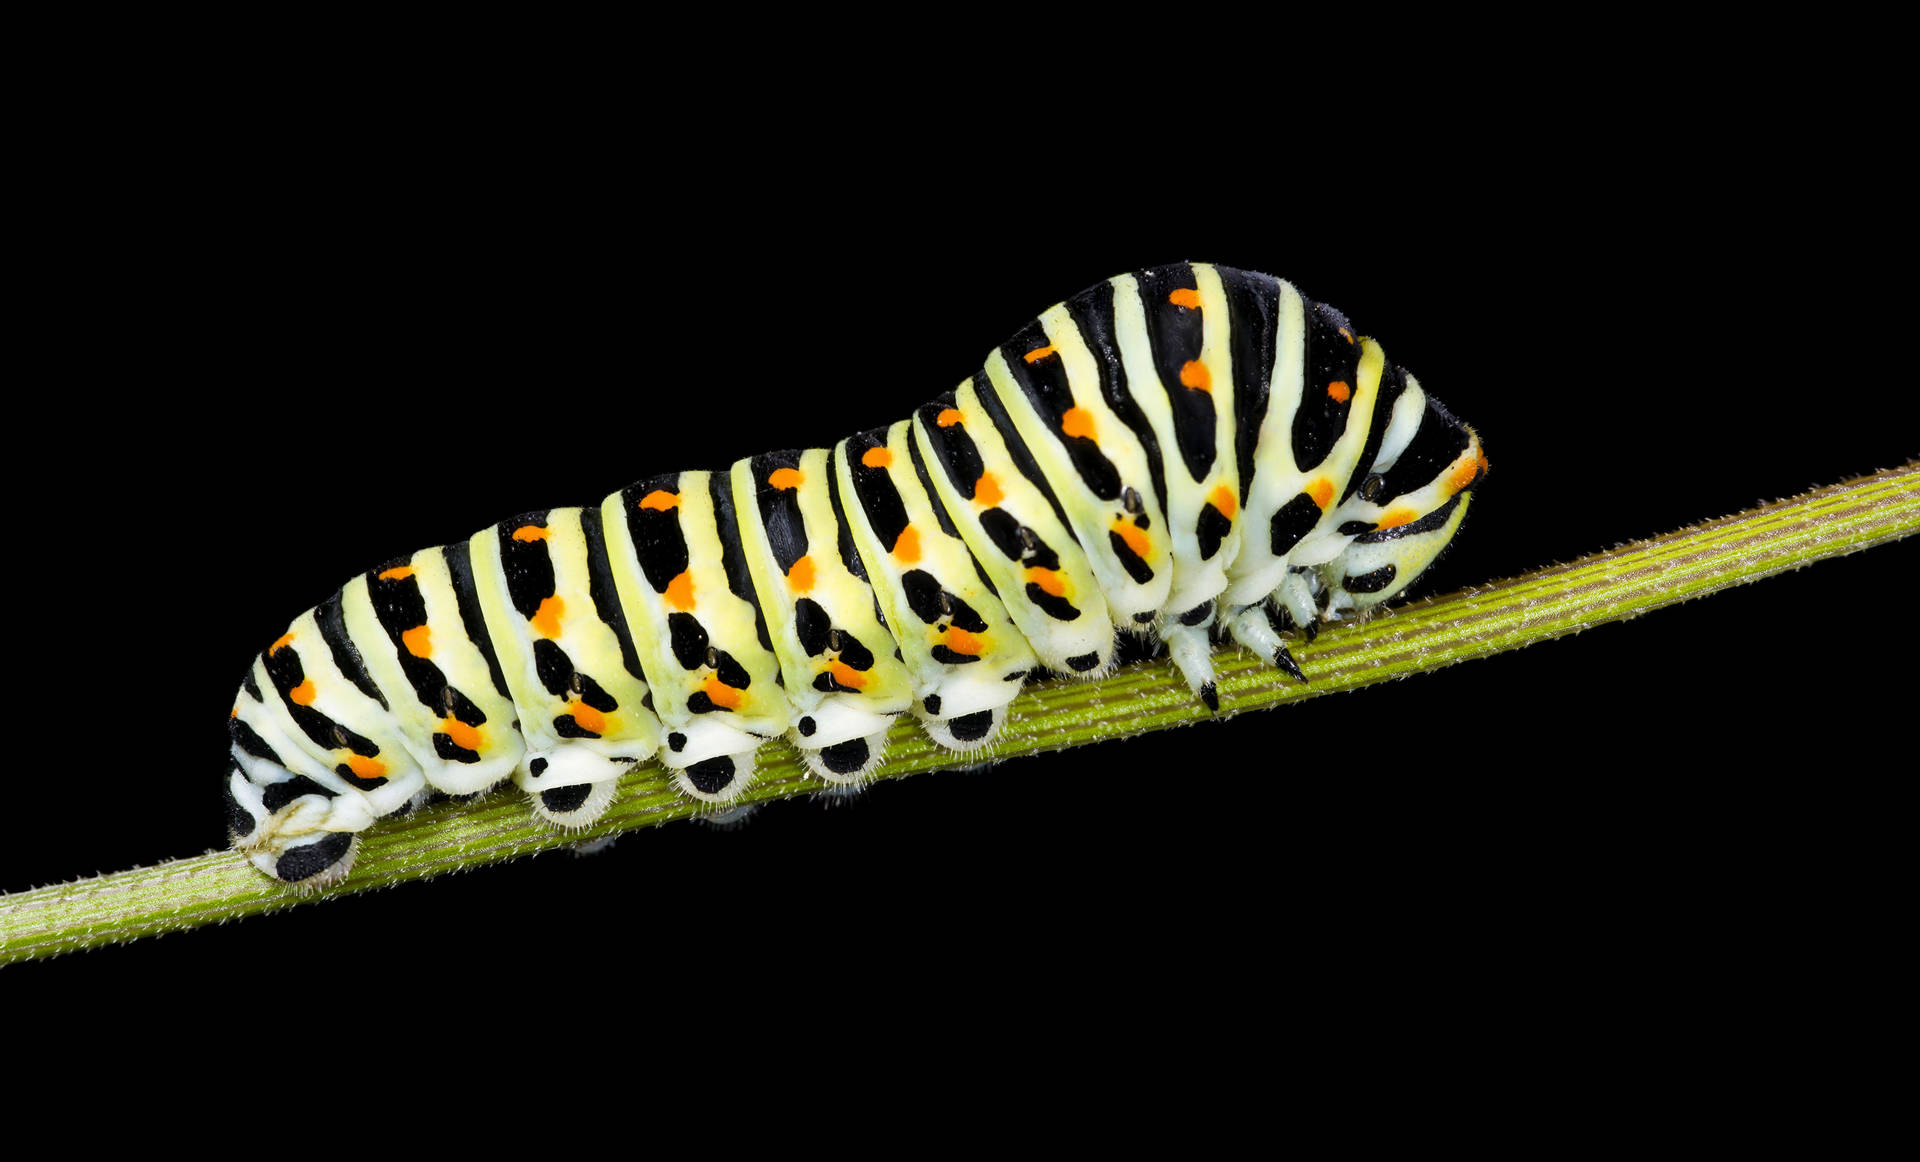 Crawling Caterpillar On A Stem